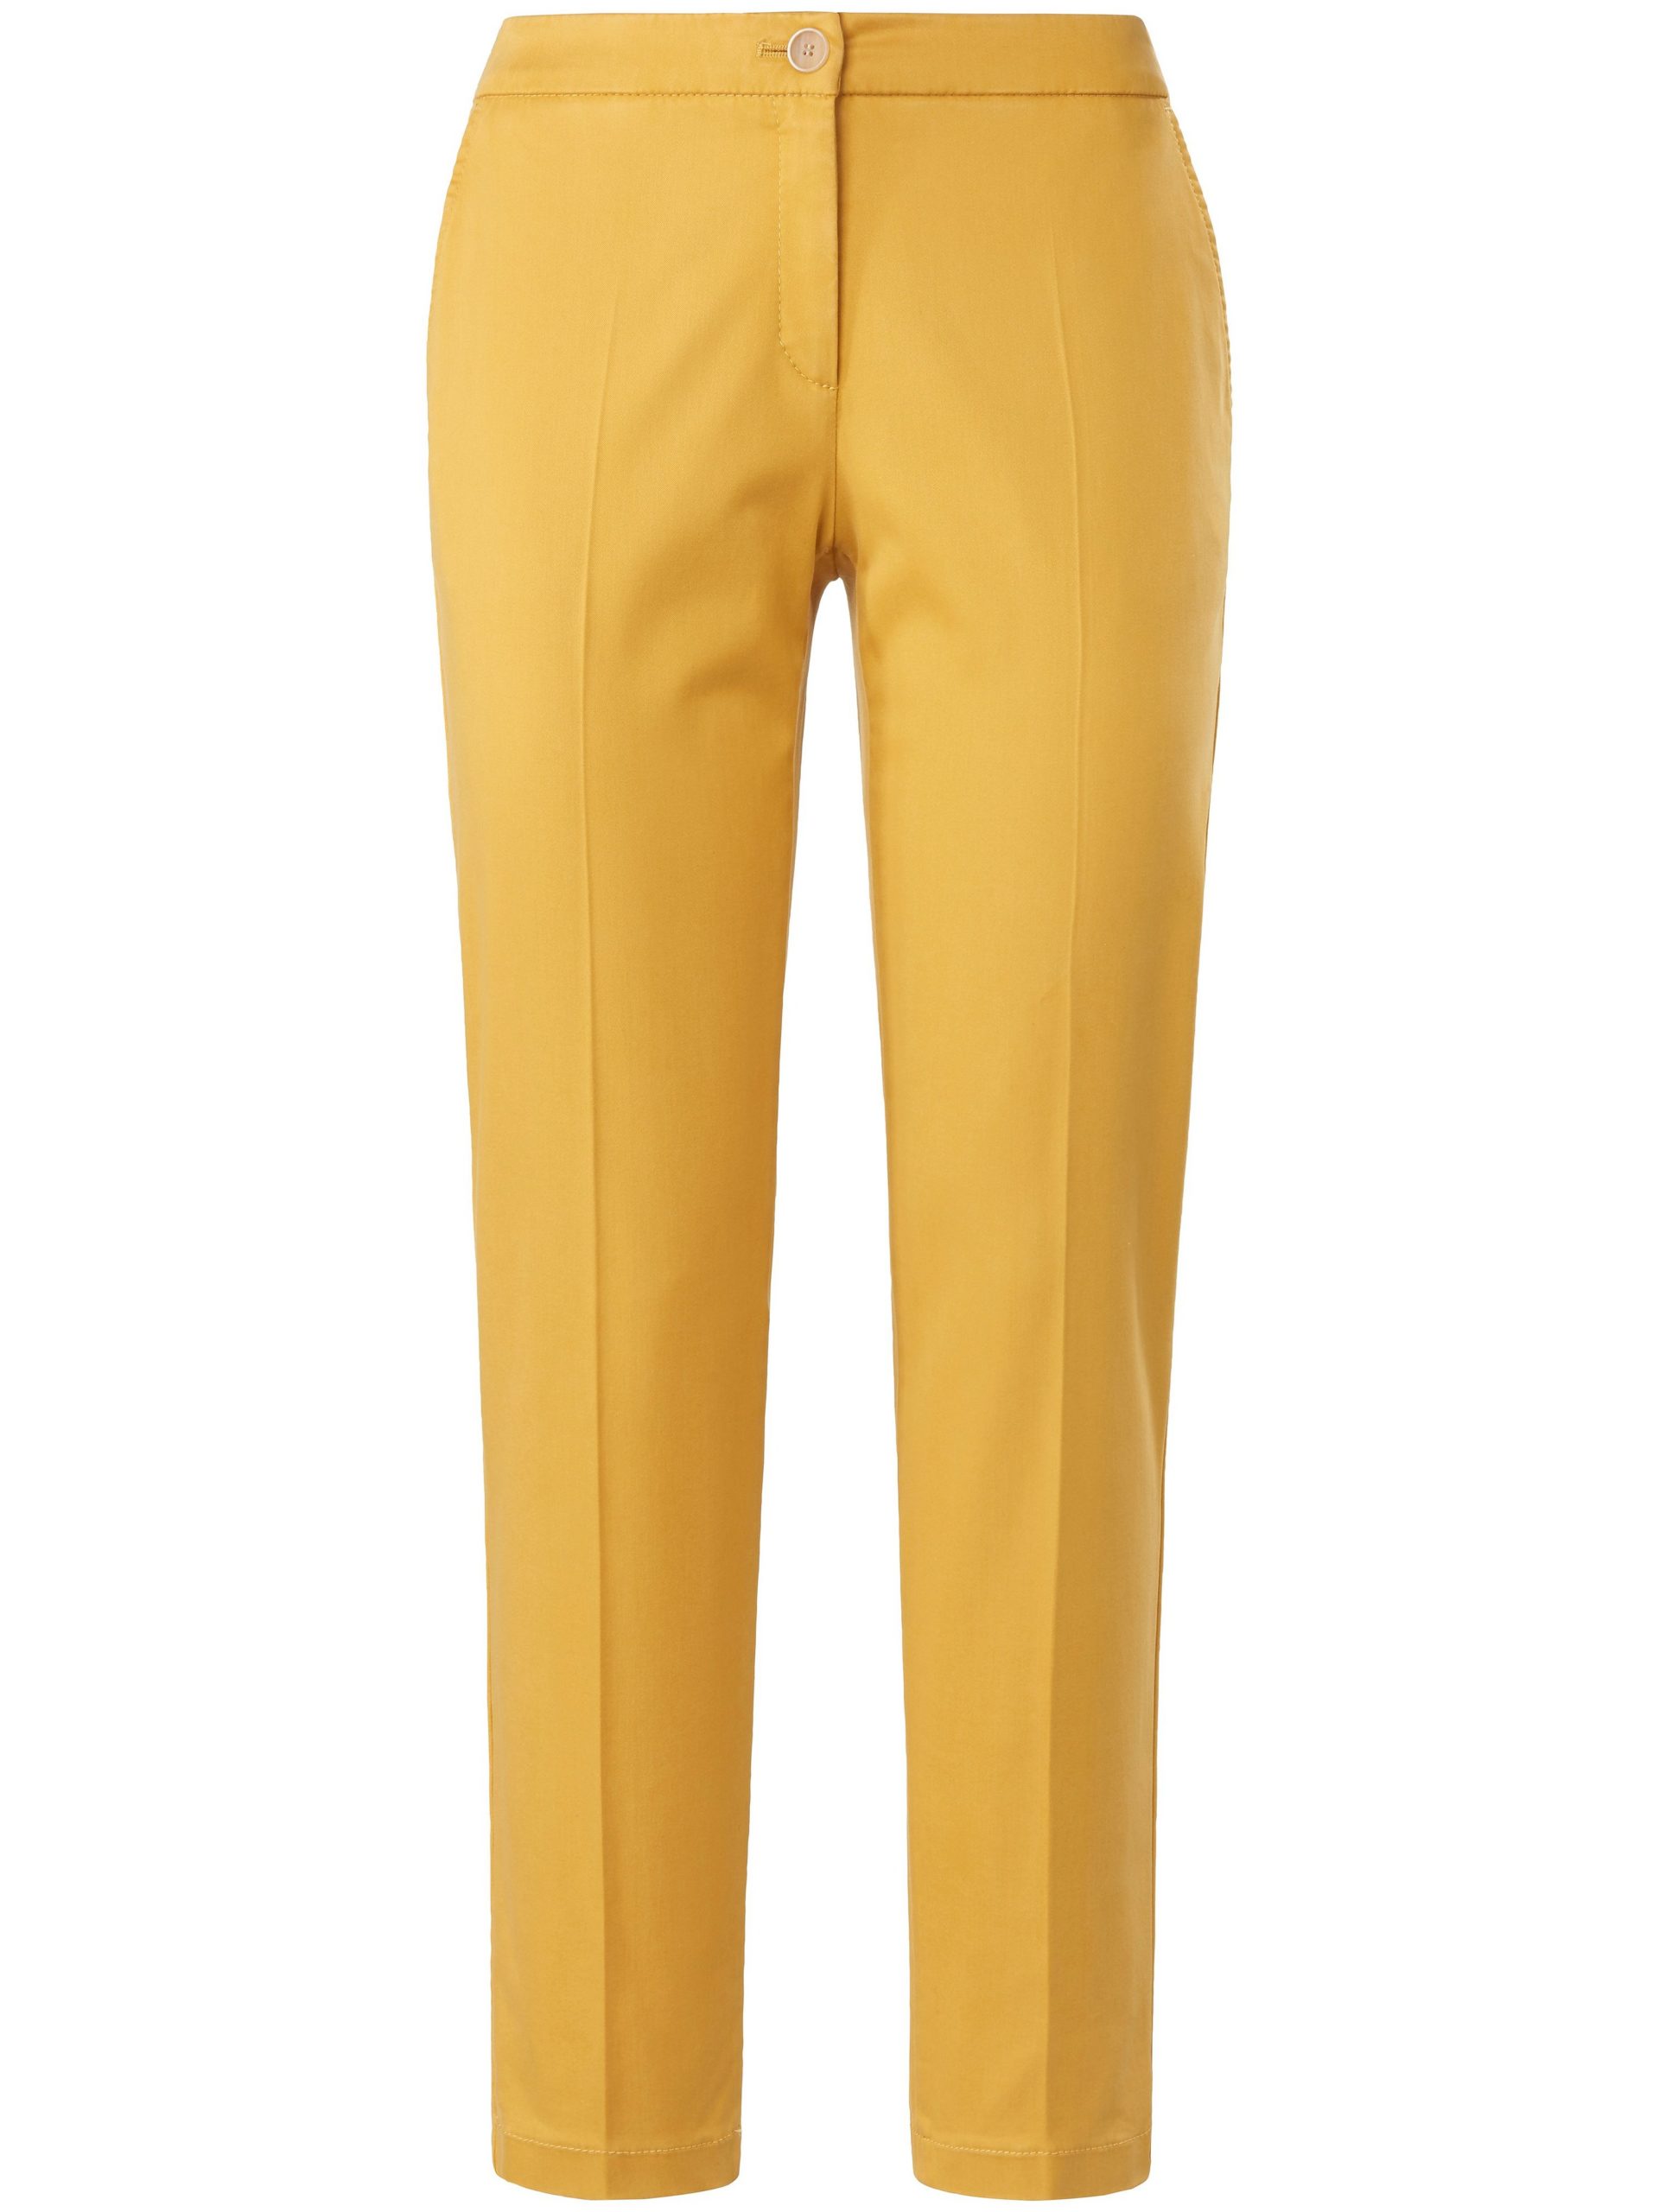 Enkellange Modern Fit-broek model Maron Van Brax Feel Good geel Kopen